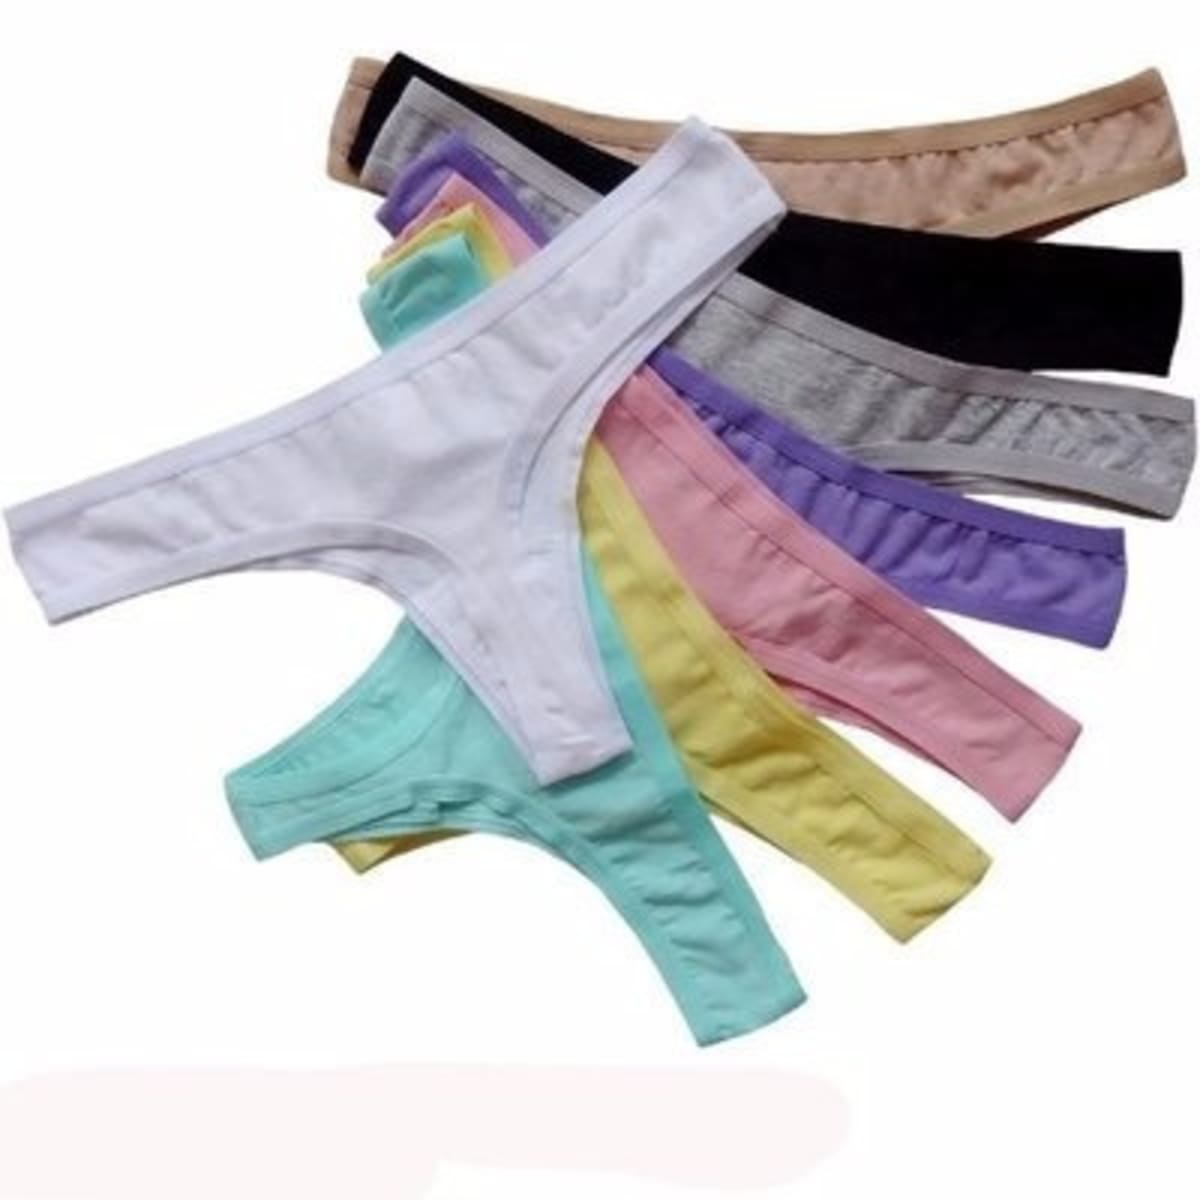 https://www-konga-com-res.cloudinary.com/w_400,f_auto,fl_lossy,dpr_3.0,q_auto/media/catalog/product/W/o/Women-s-Thong-Panties-Set---Multicolour-7930166.jpg